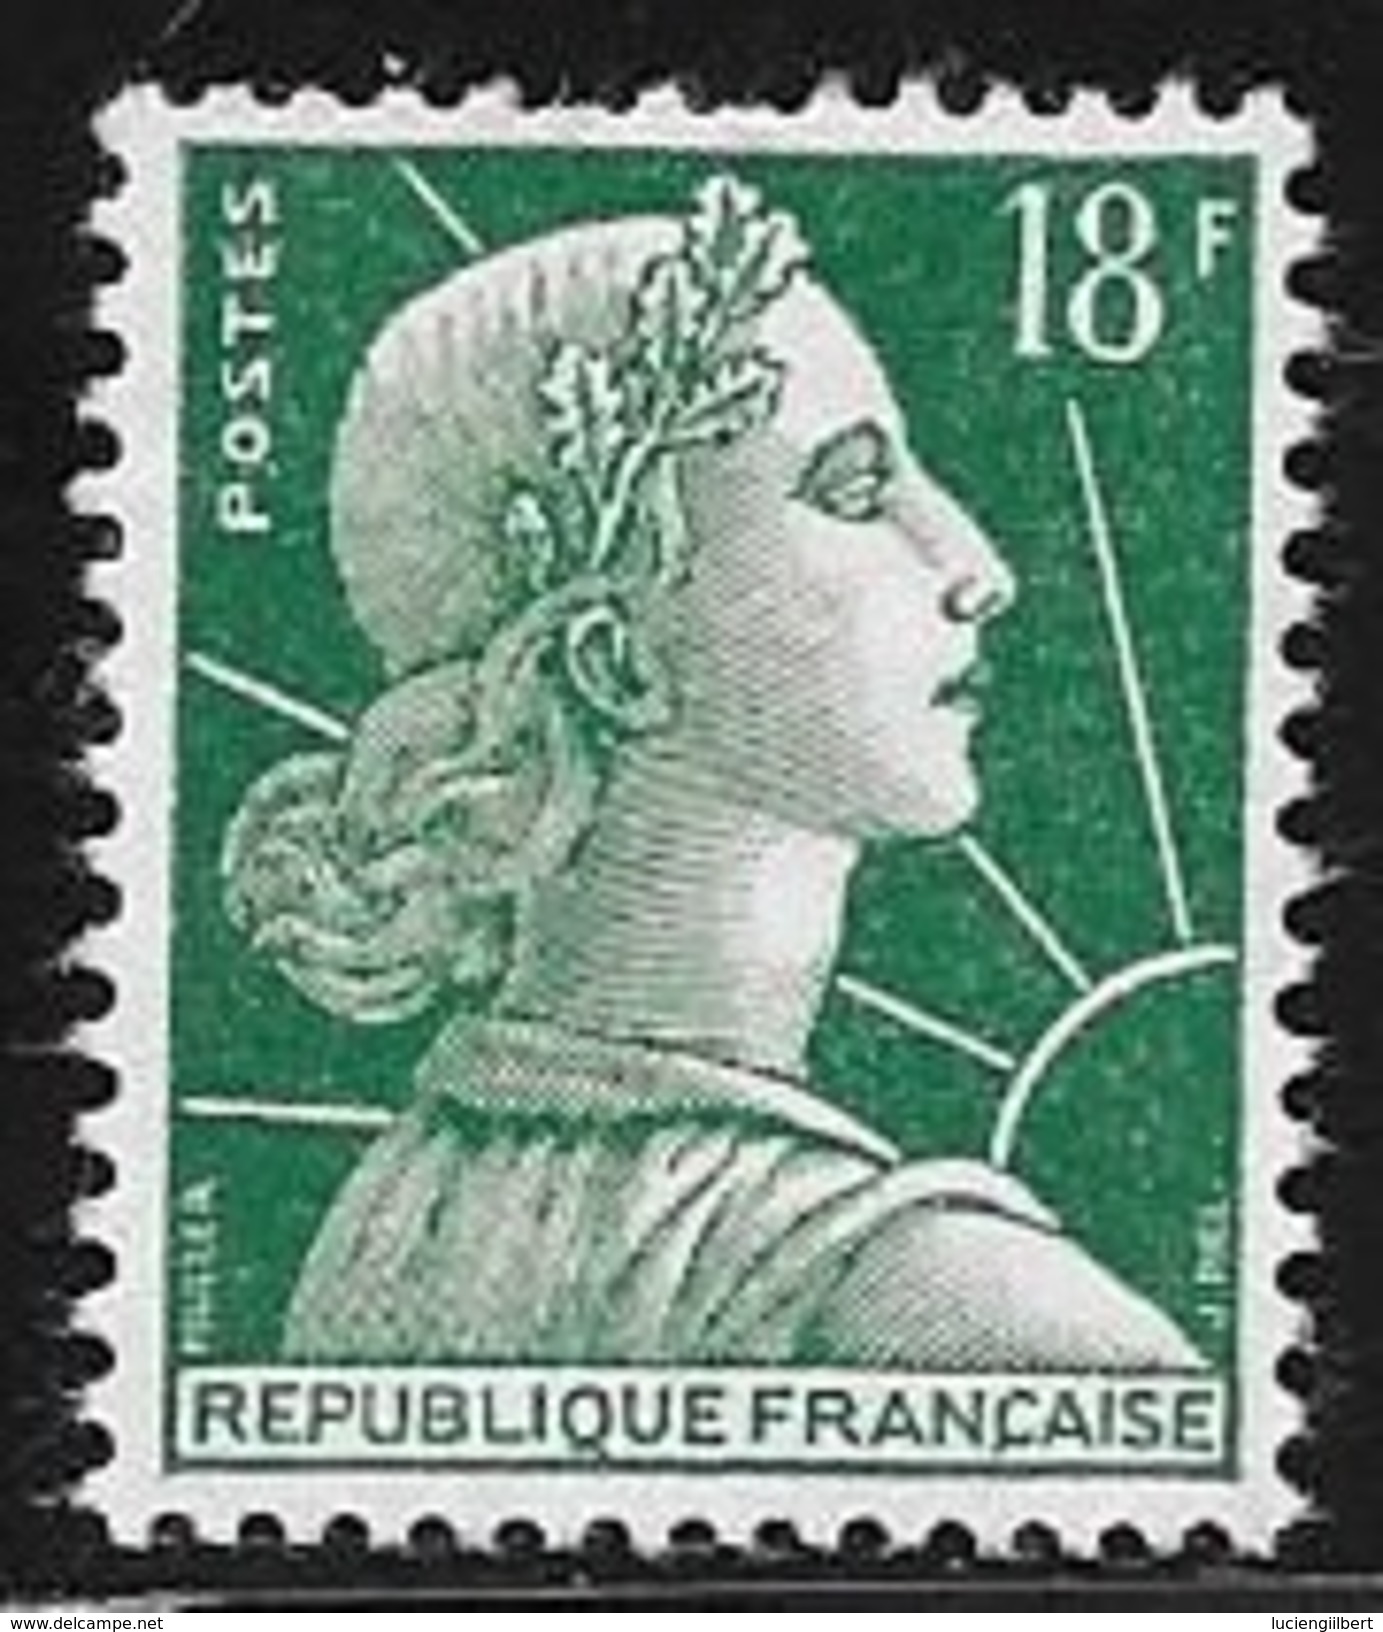 N° 1011 A     FRANCE  -  NEUF  -  18 F   MARIANNE DE MULLER   -  1955 - Nuovi